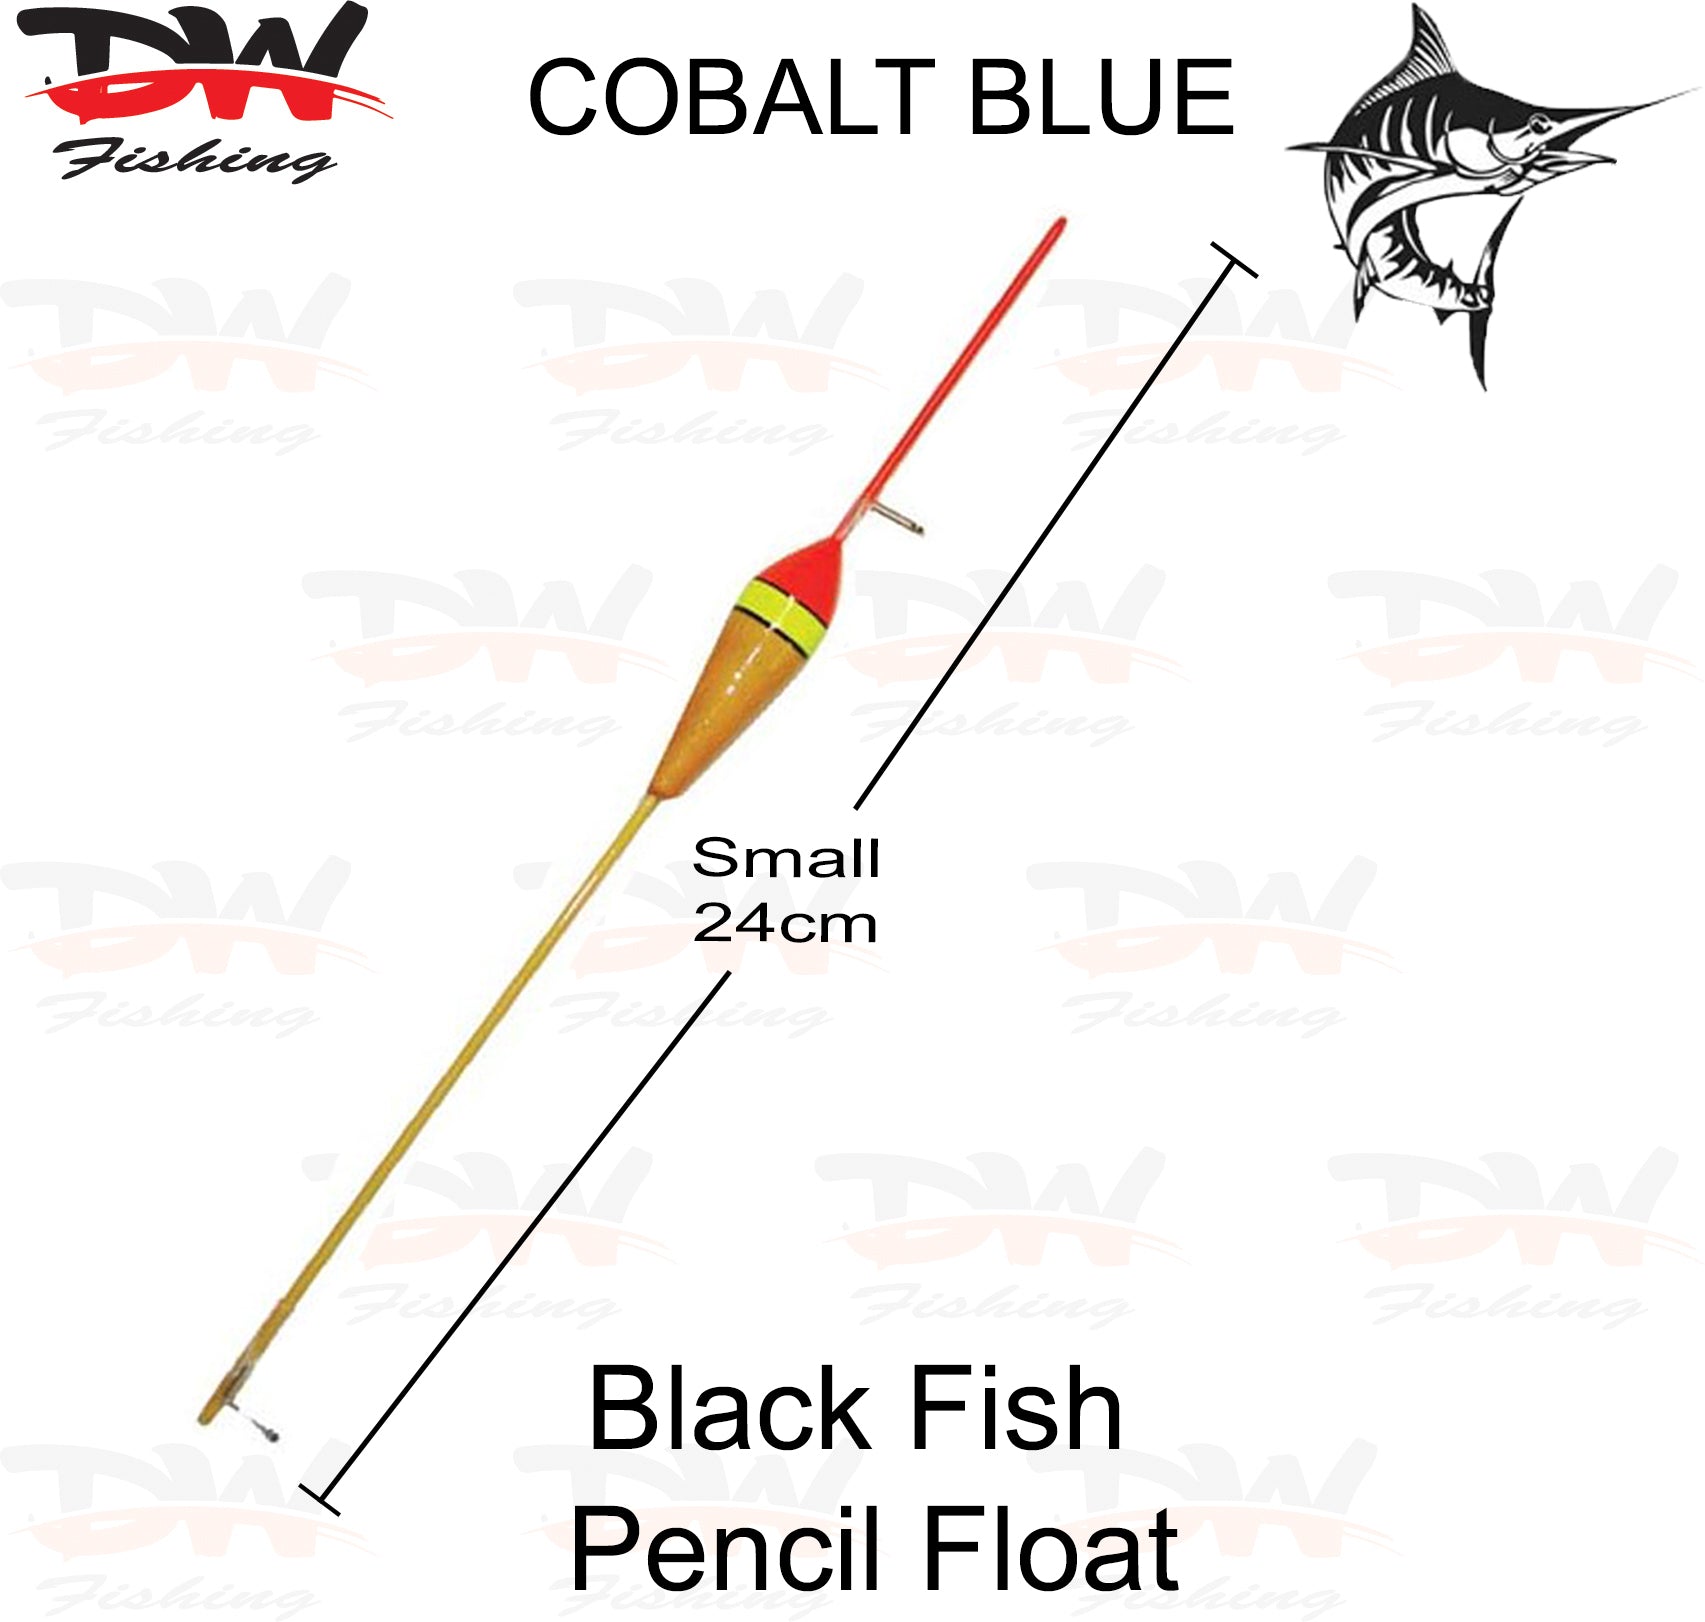 Black Fish Float | Blackfish Stick Float